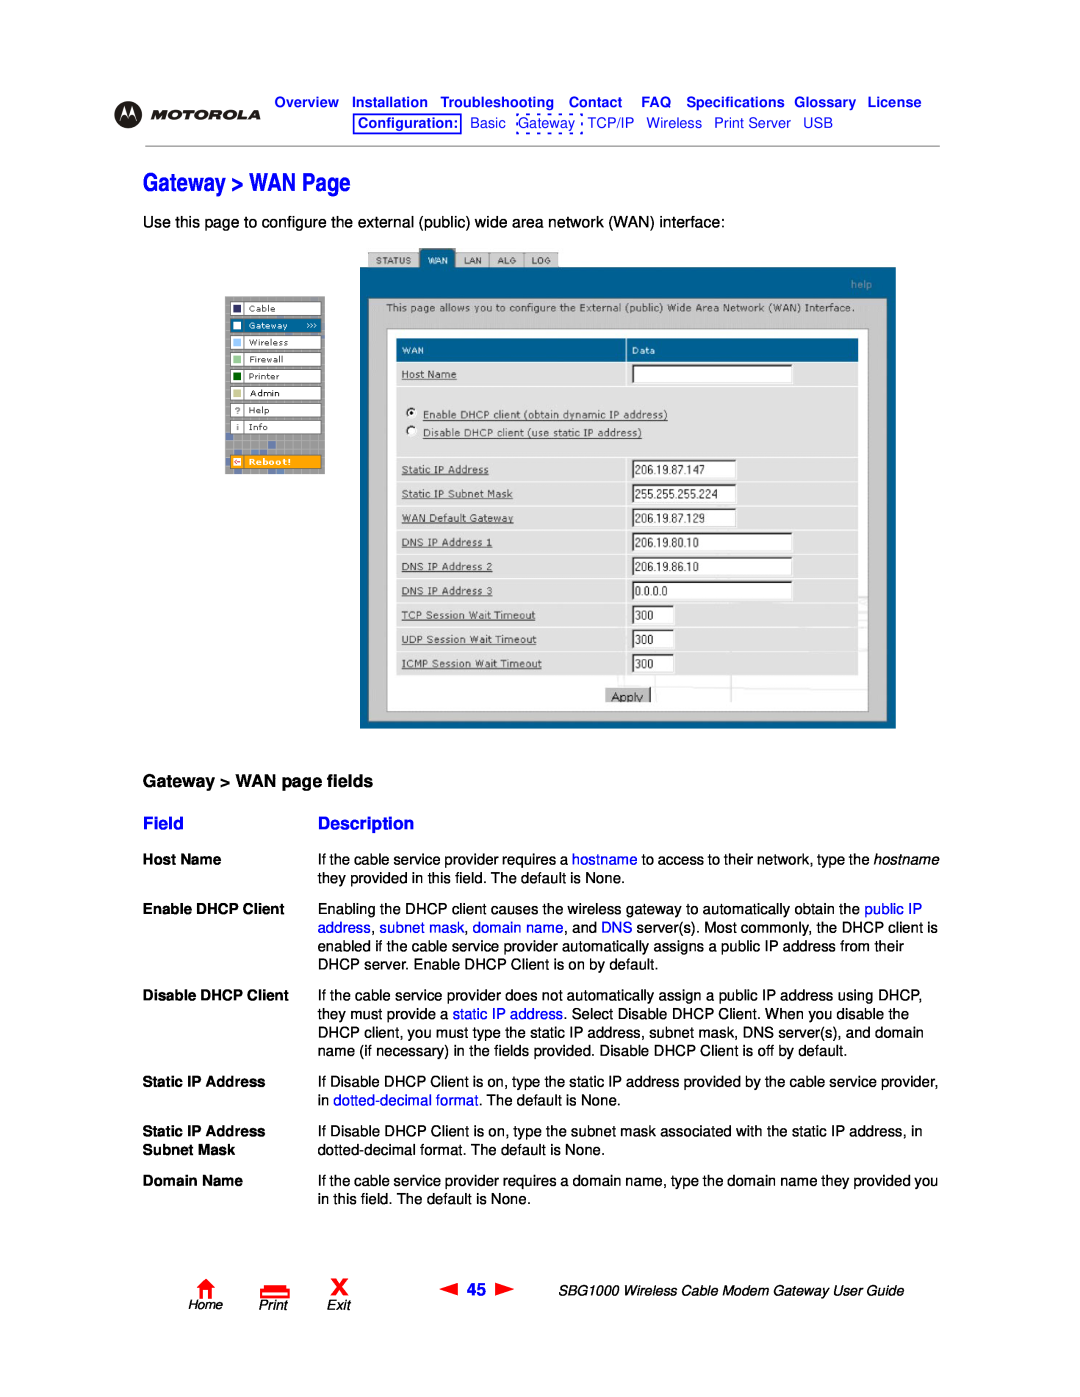 Motorola SBG1000 manual Gateway WAN Page, Gateway WAN page fields, Field, Description, Home Print Exit 